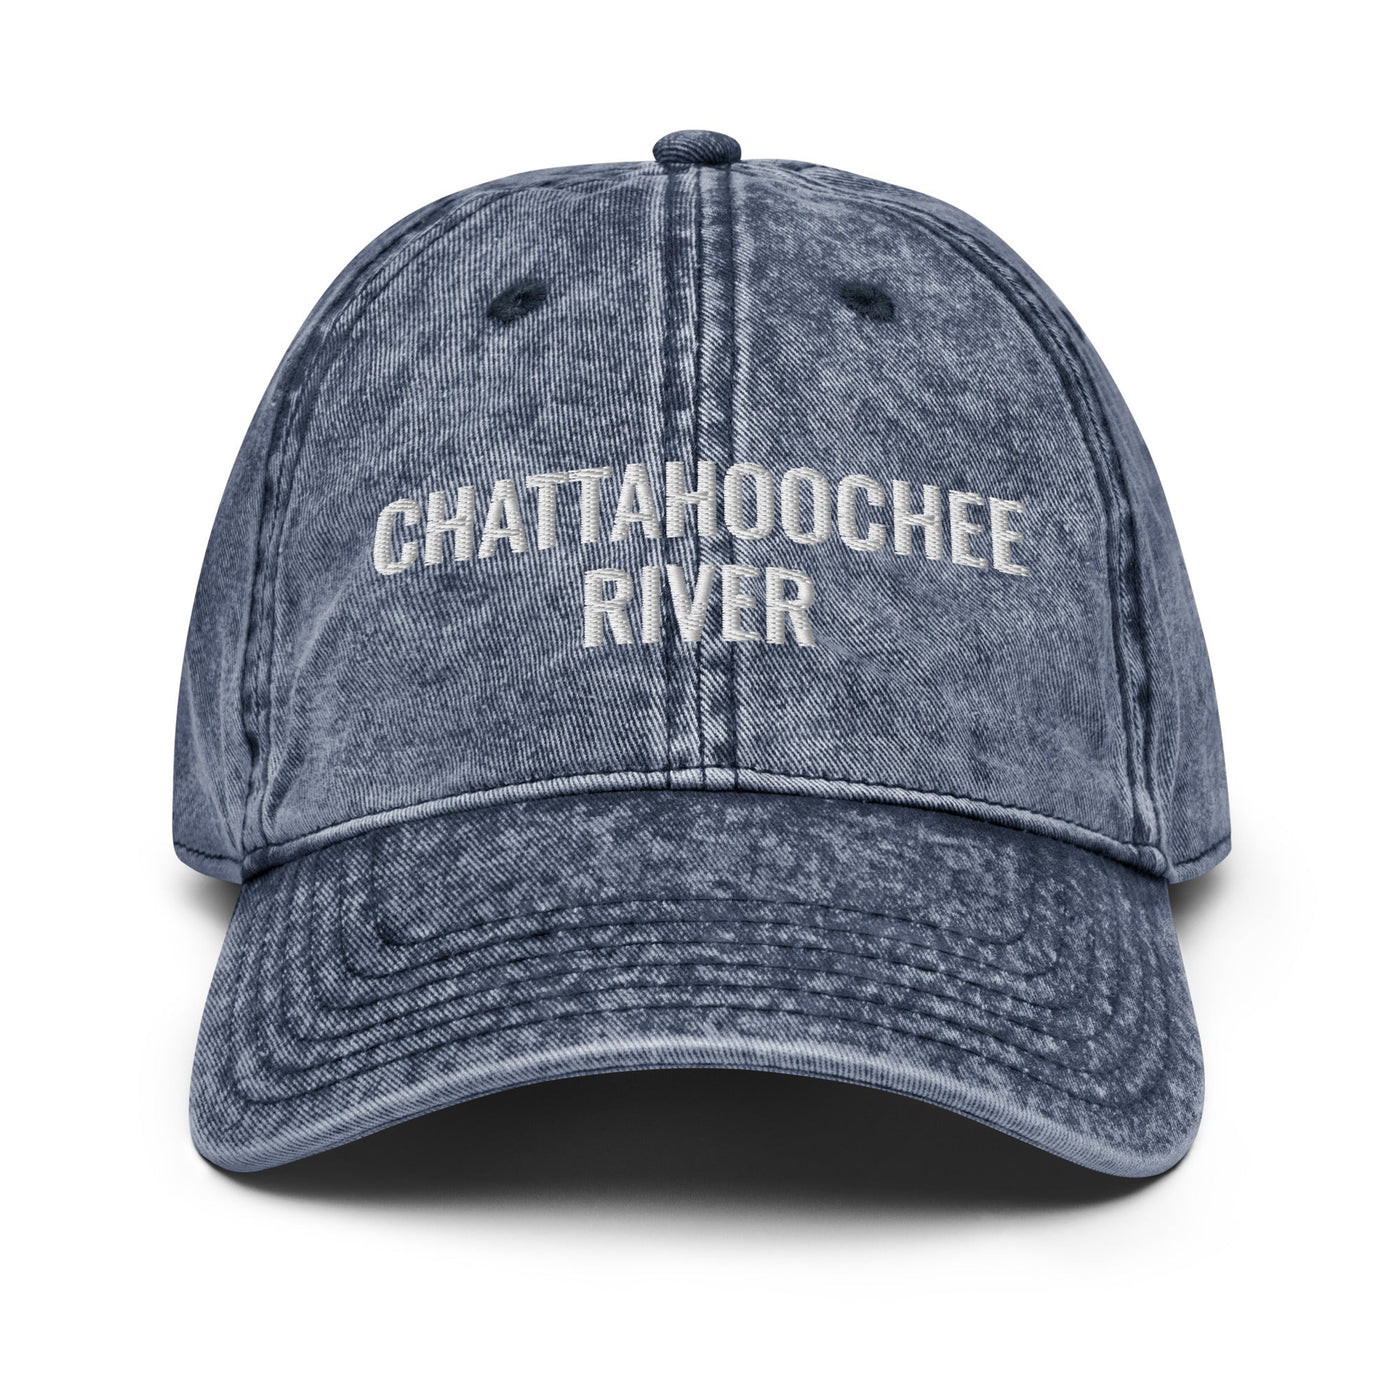 Chattahoochee River Hat - Ezra's Clothing